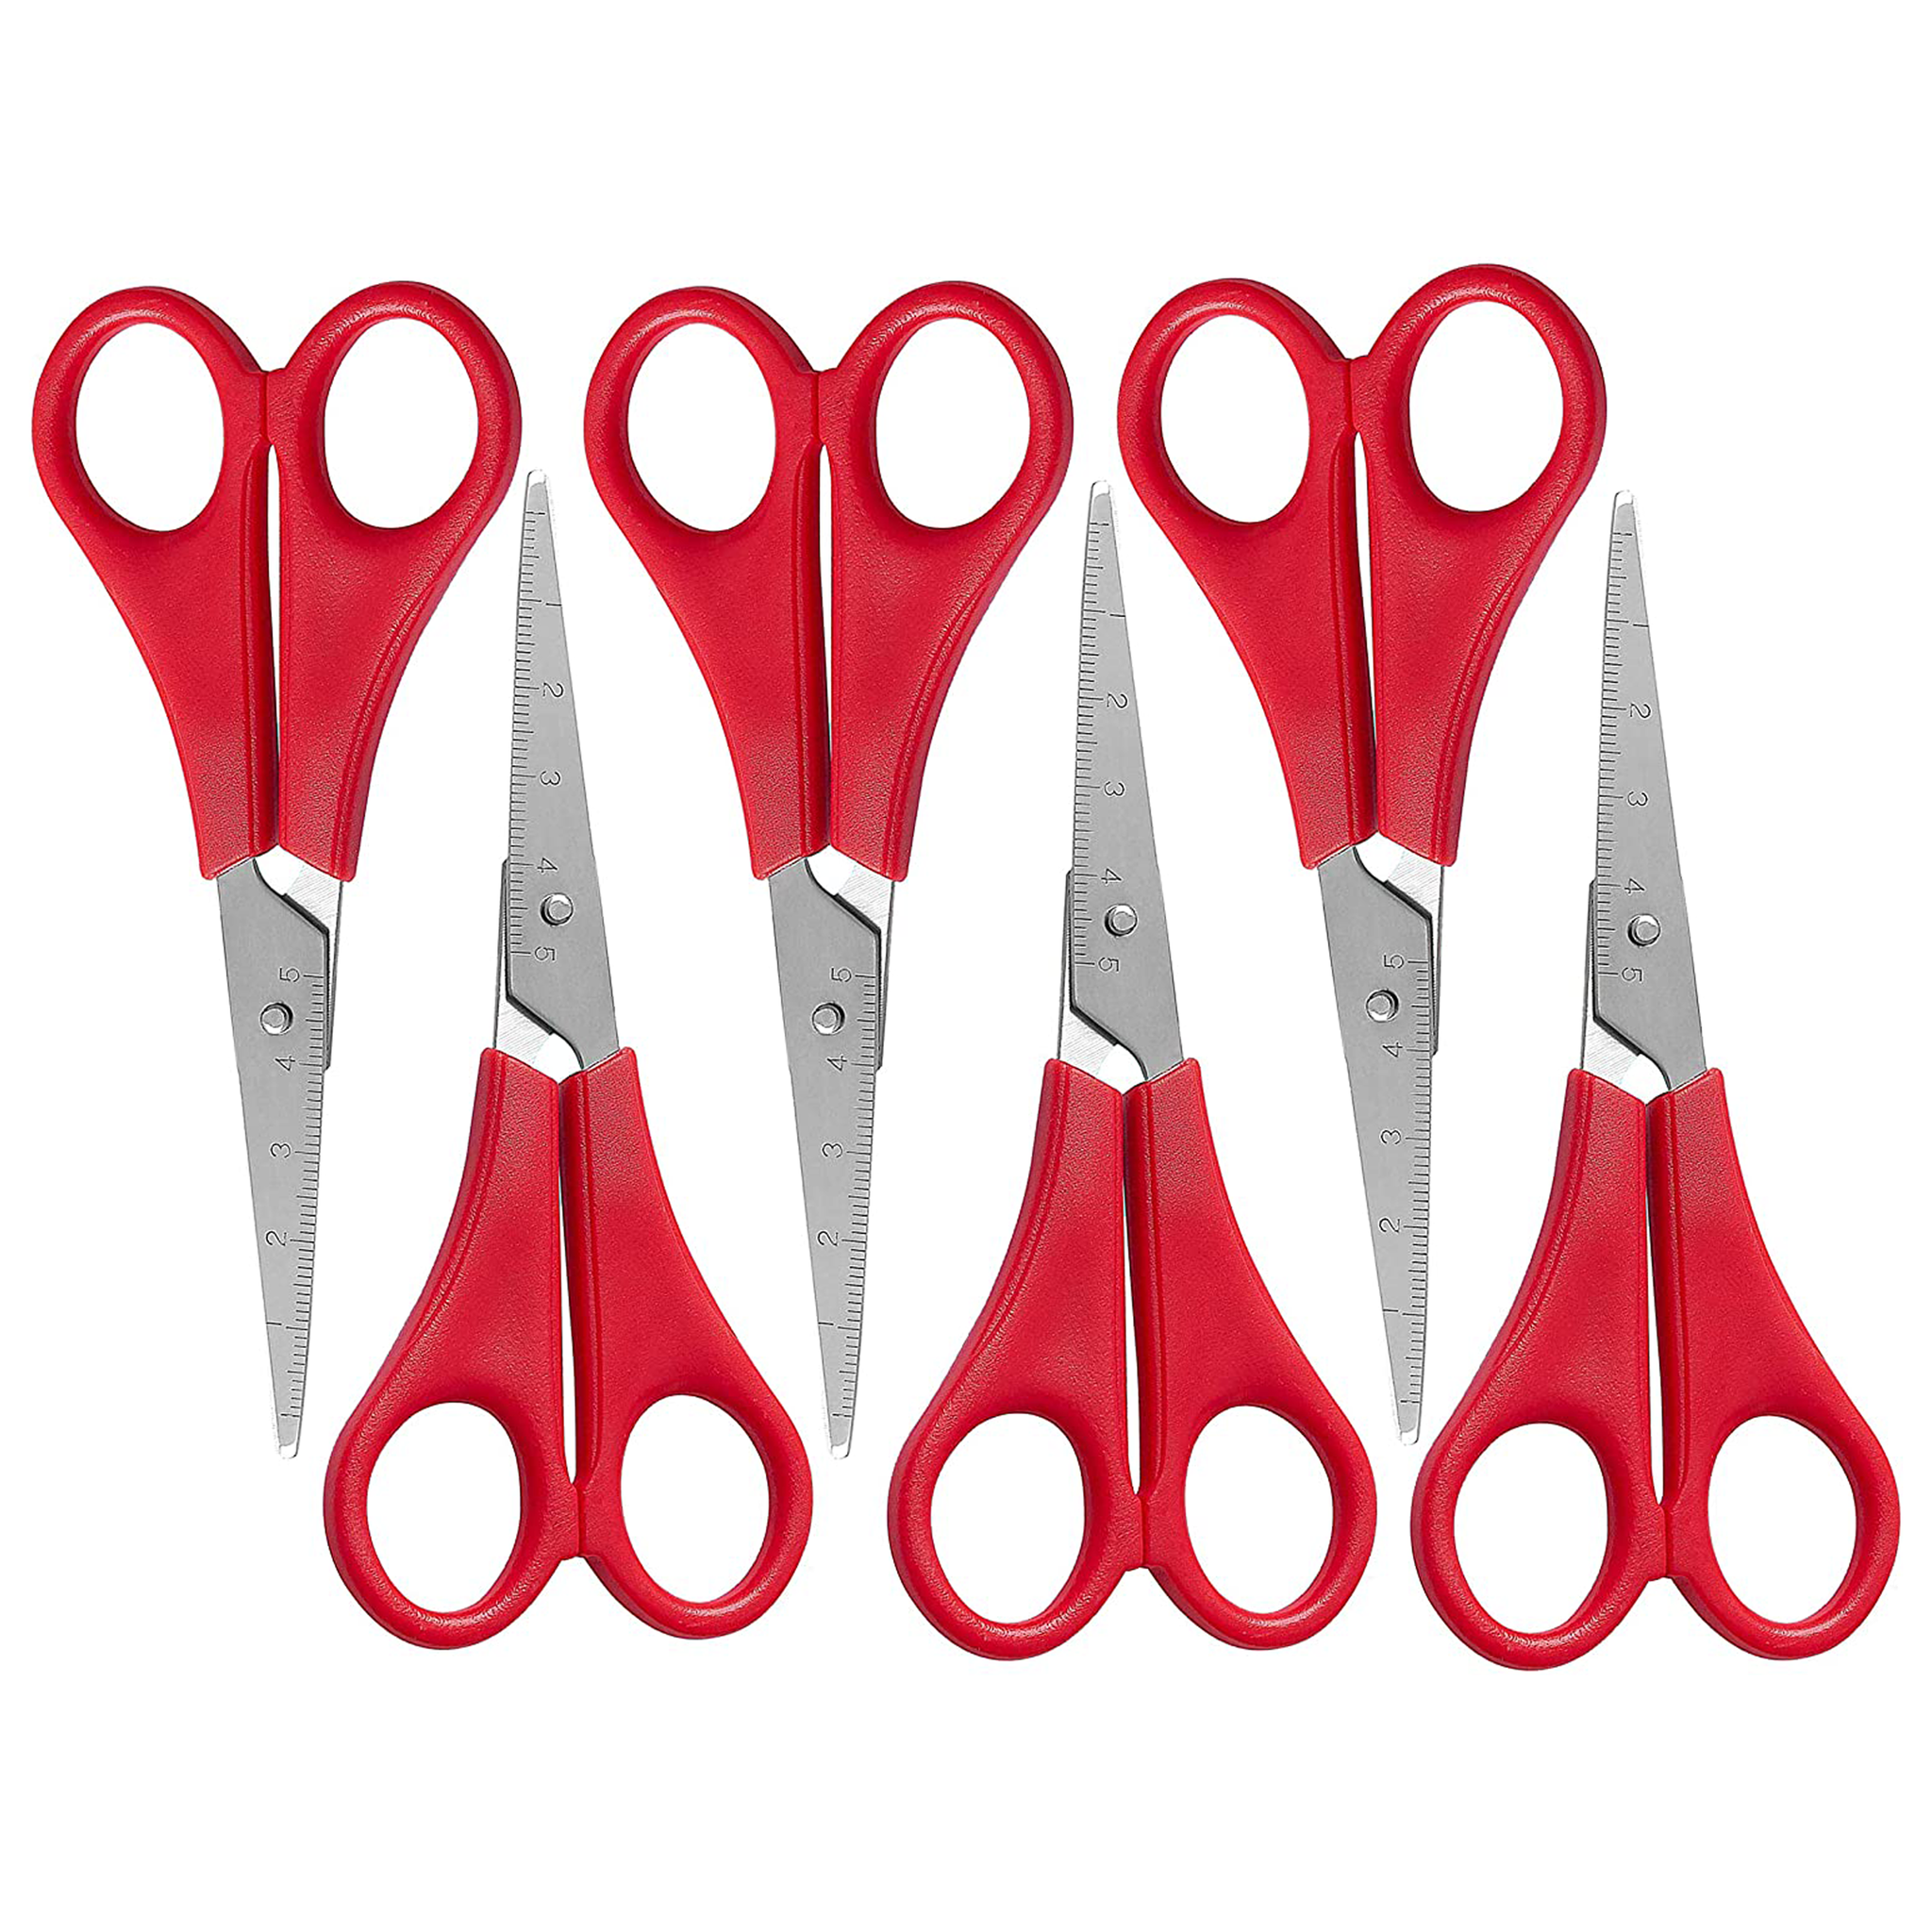 W.A. Portman 6pk Red Kids Pointed Scissors